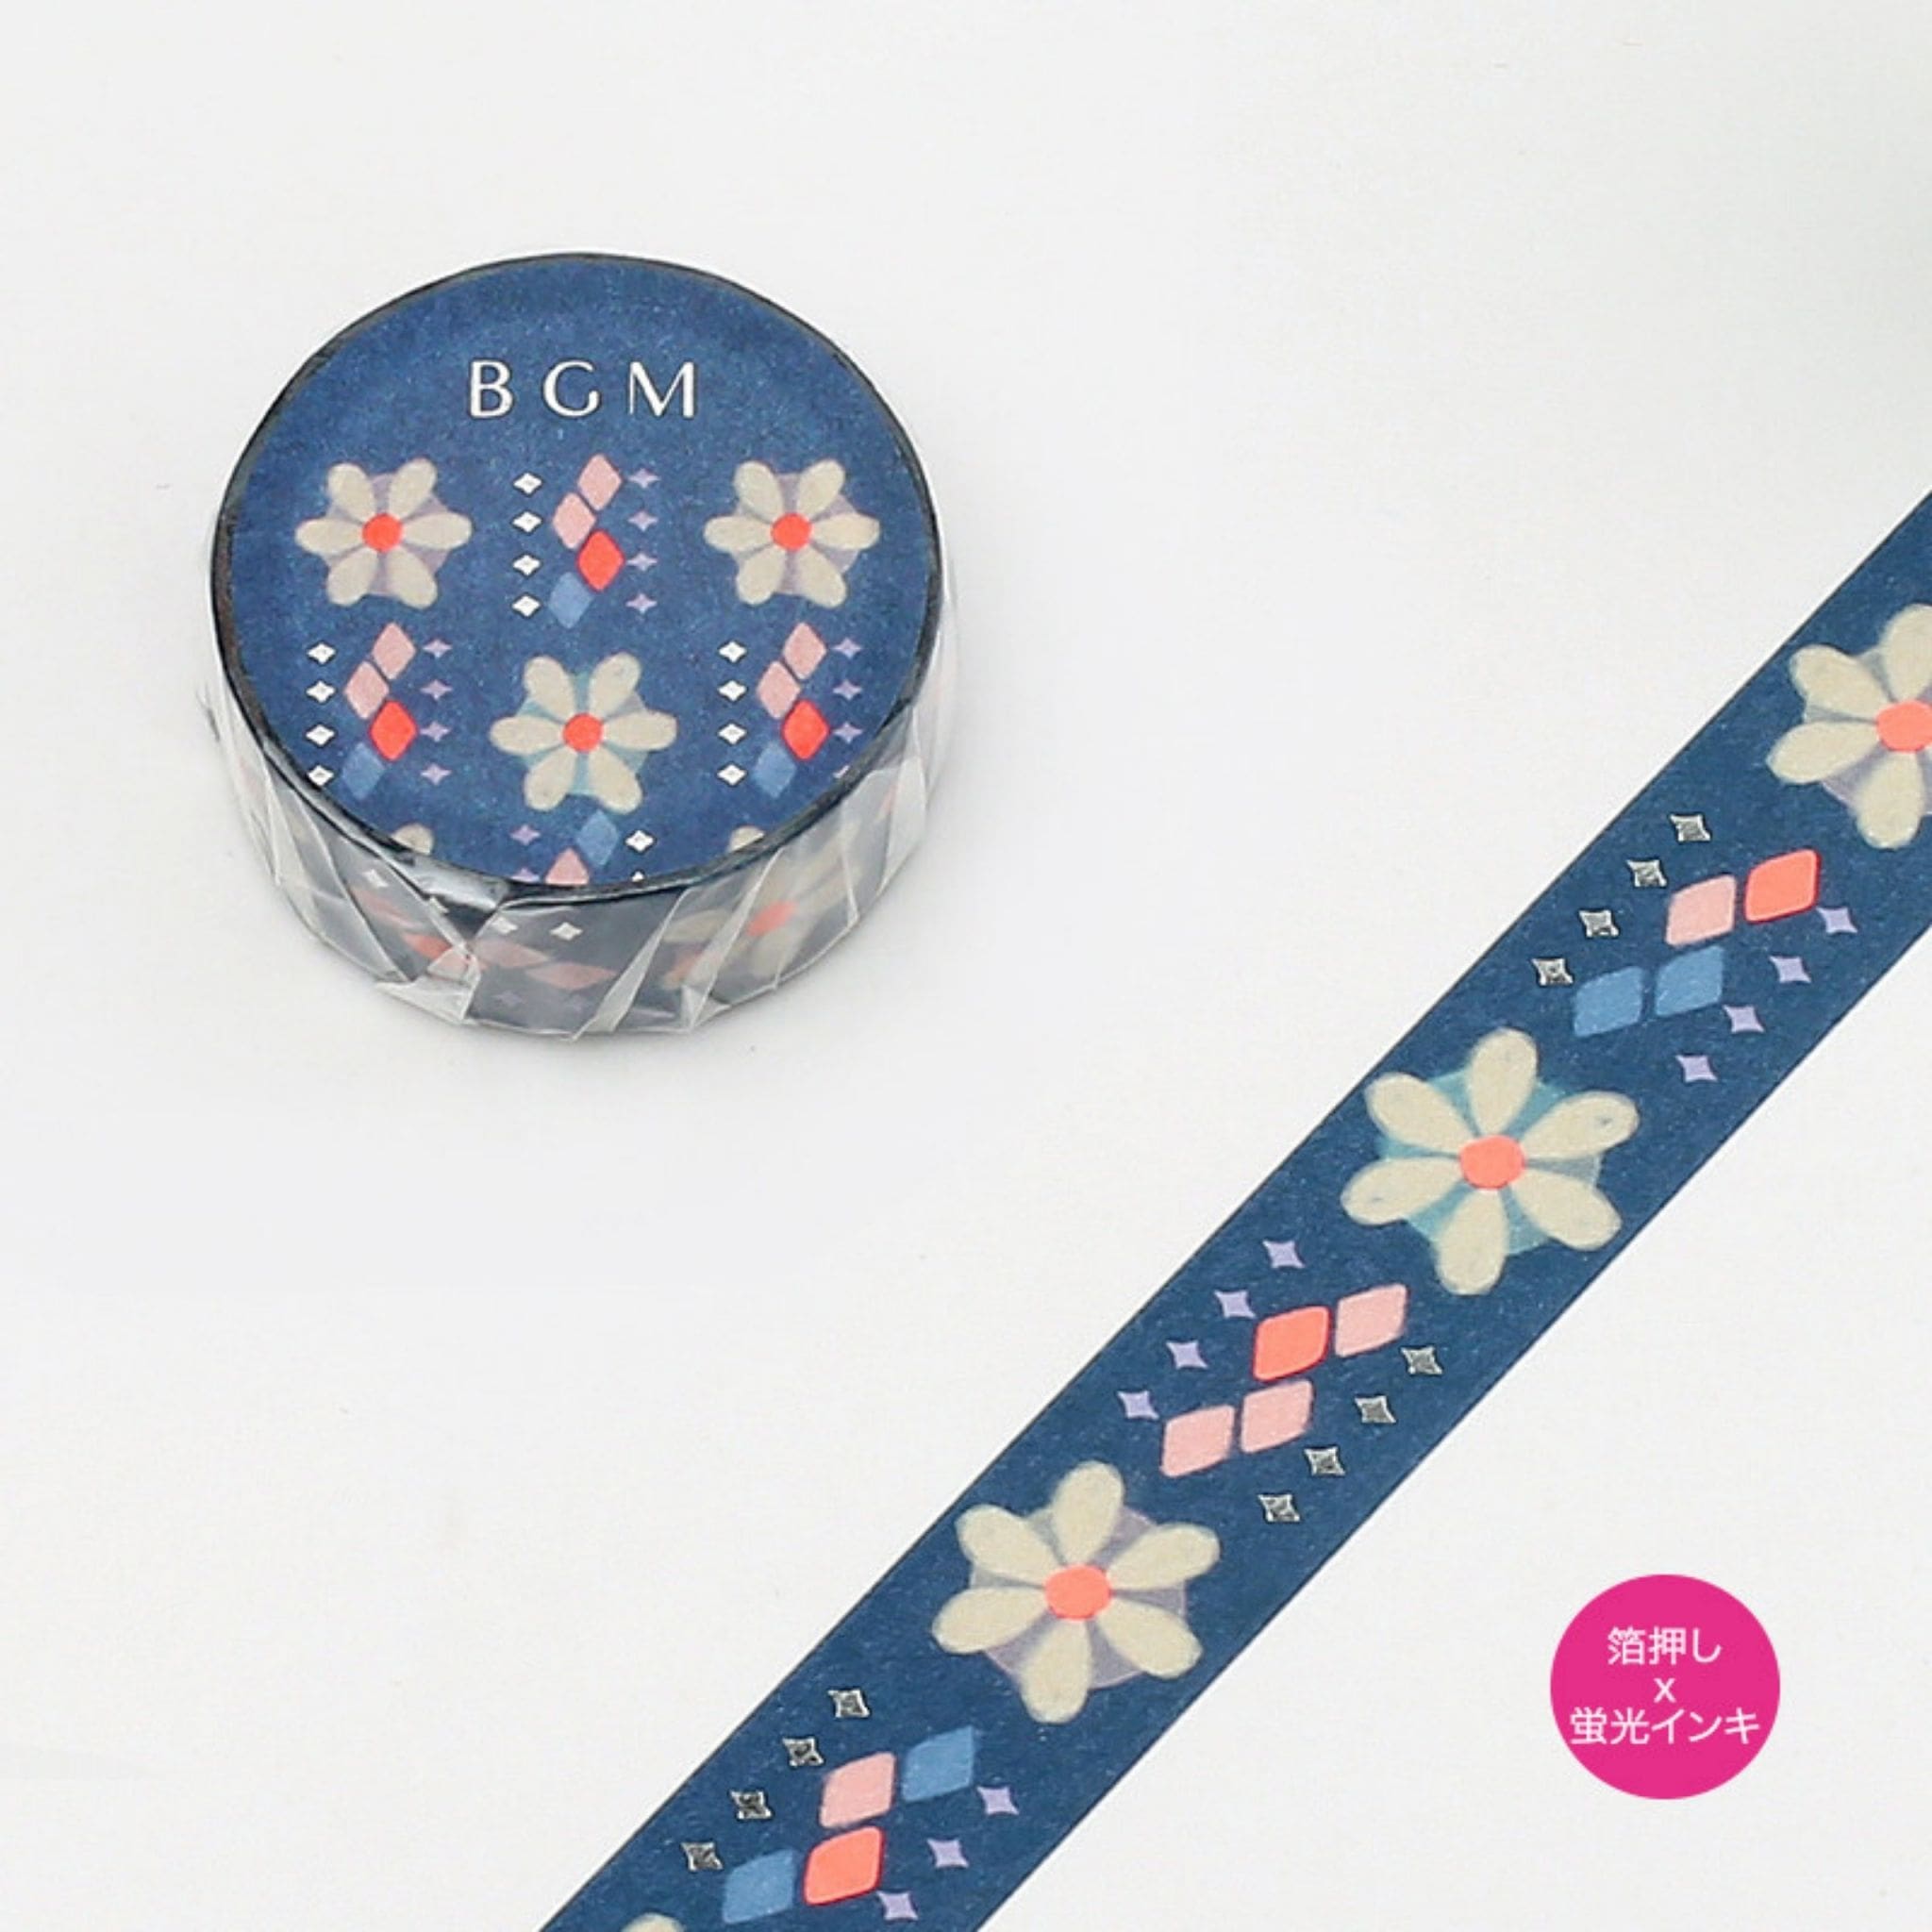 BGM Night Dream Flowers decorative tape - Paper Kooka